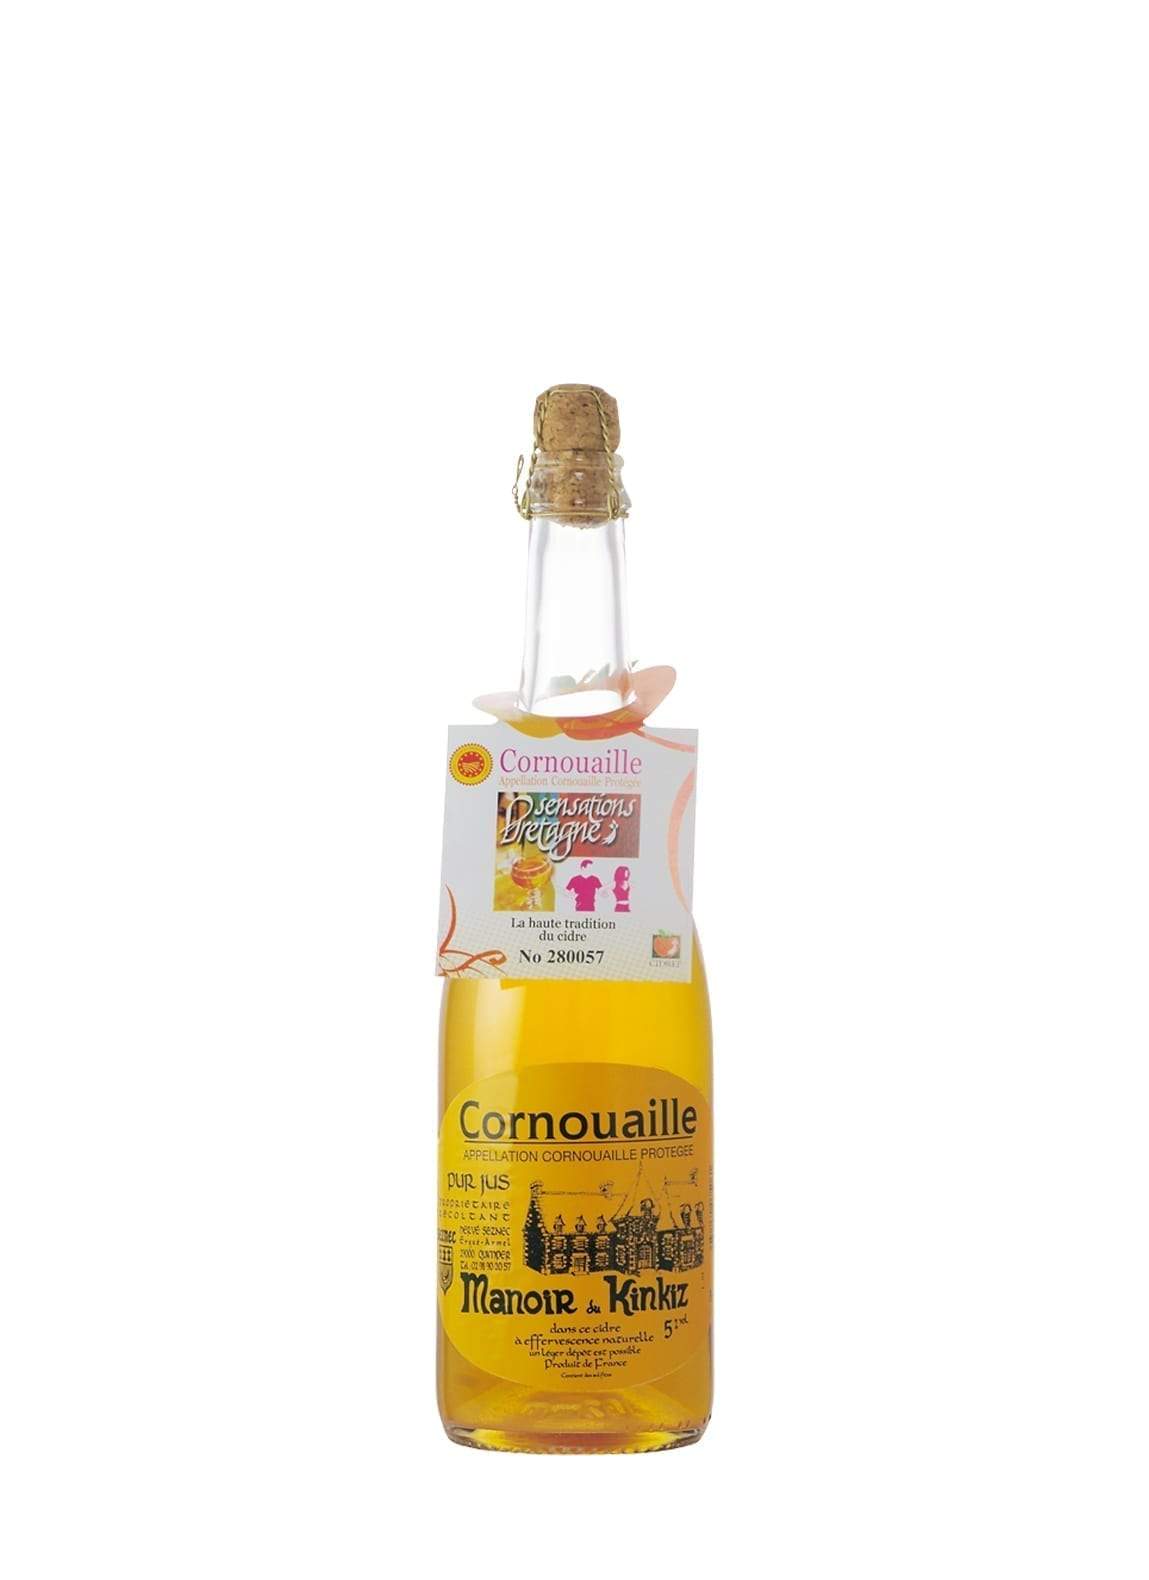 Manoir Kinkiz Cidre 'Cornouaille' (dry apple) Cider 5.5% 375ml | Hard Cider | Shop online at Spirits of France